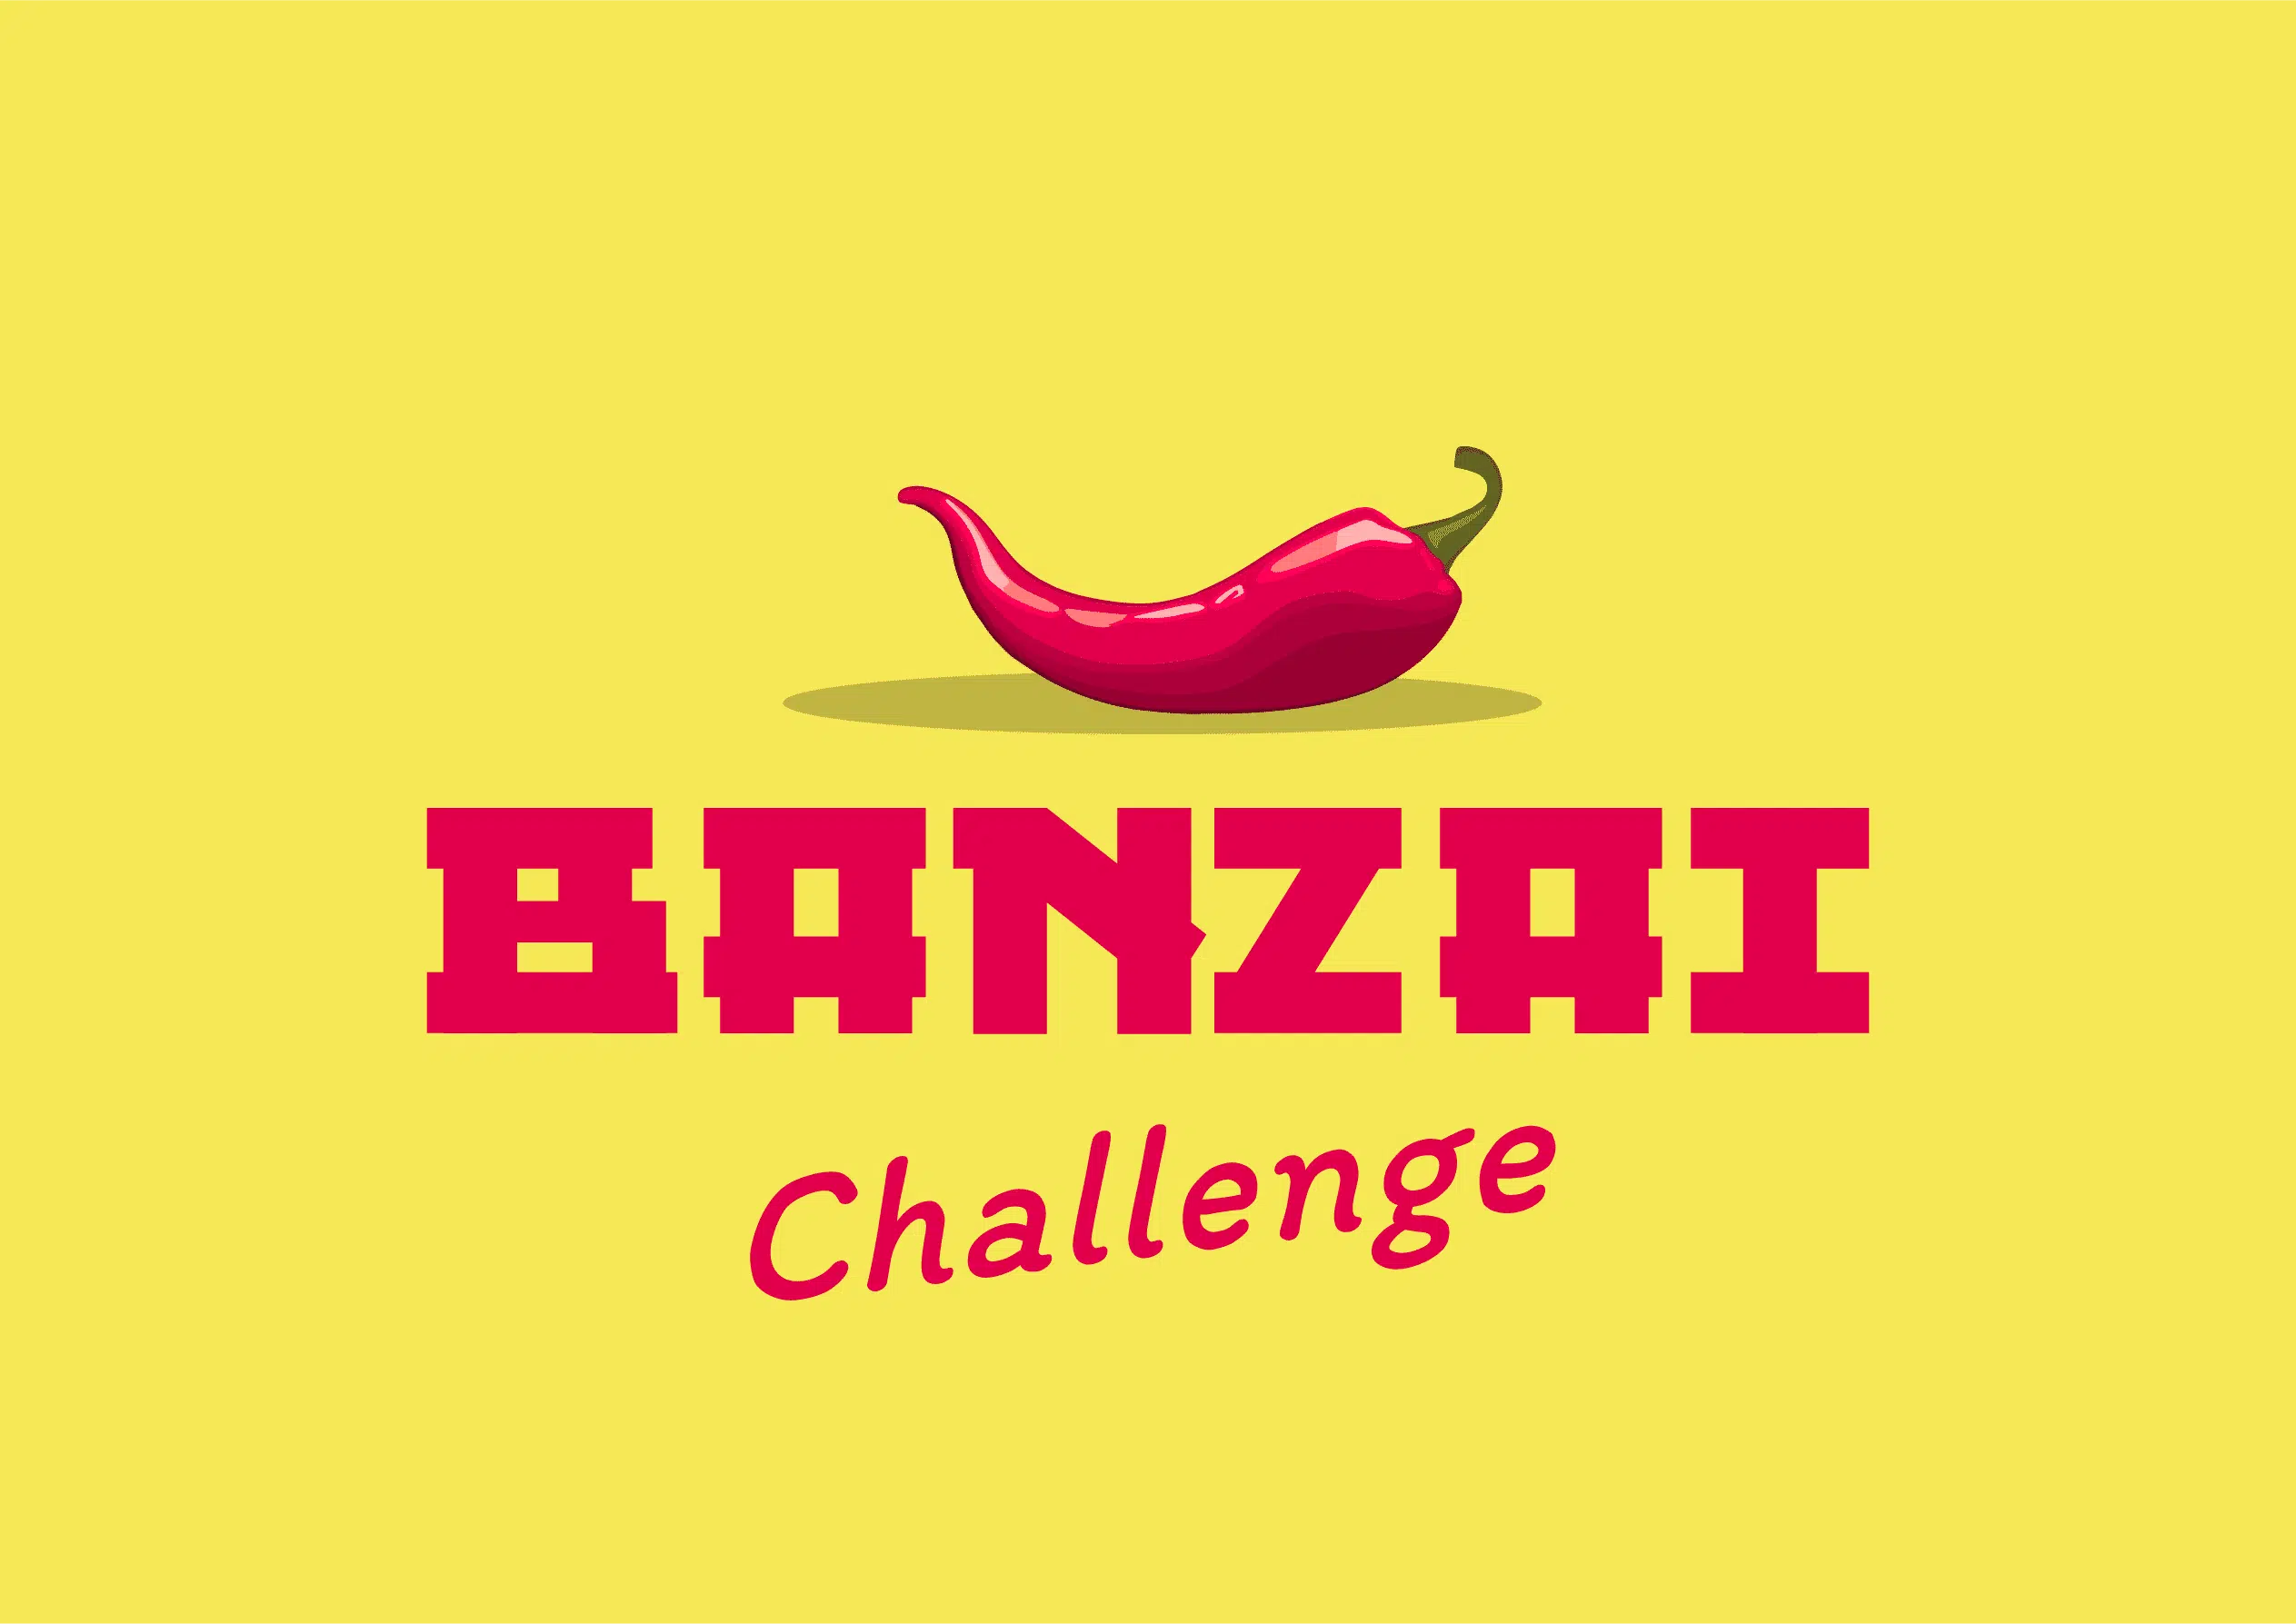 banzai-challenge